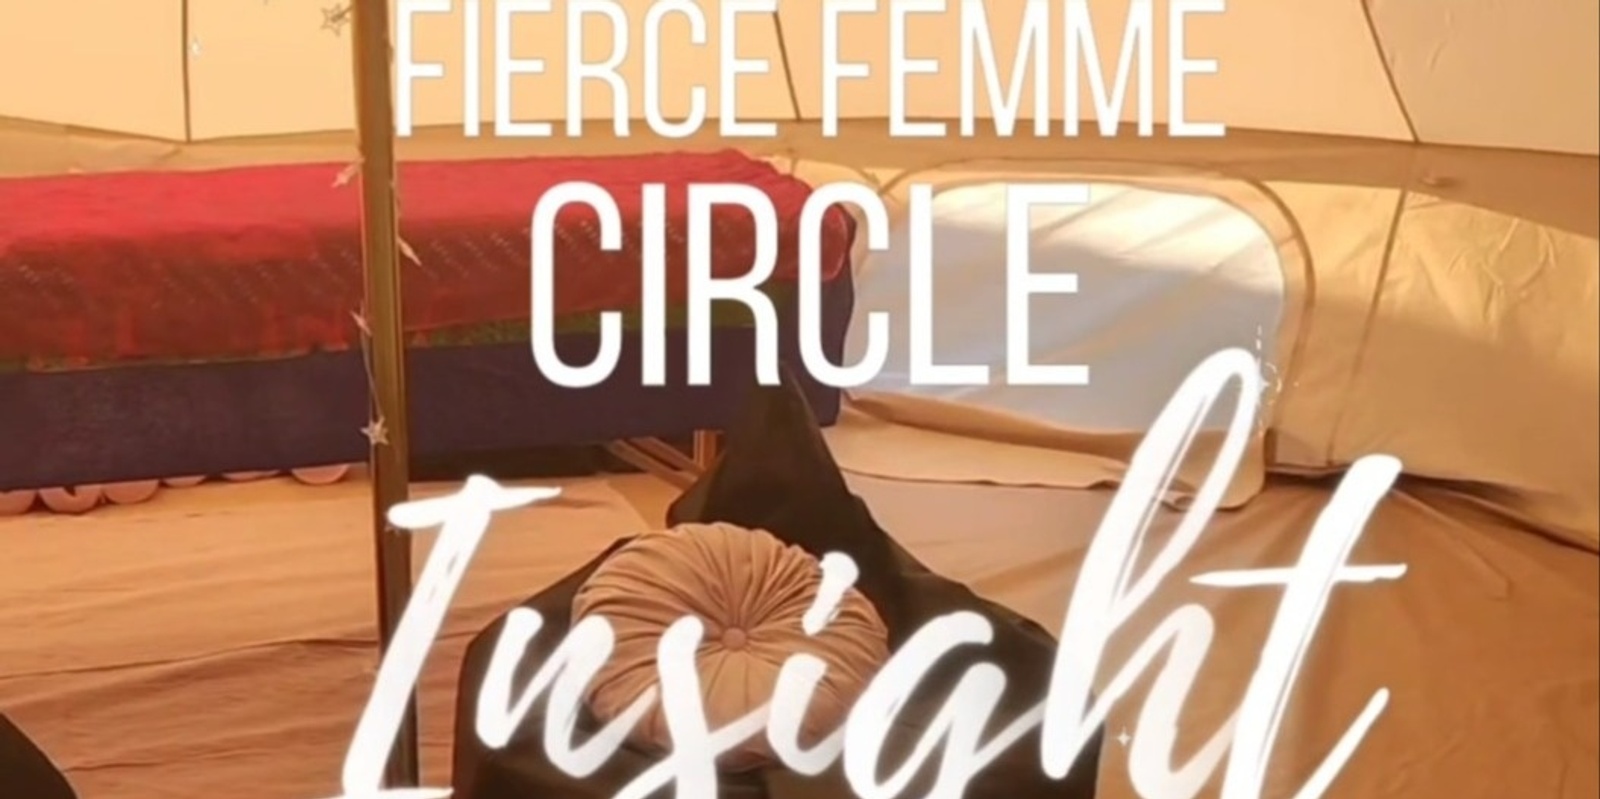 Banner image for FIERCE FEMME CIRCLE